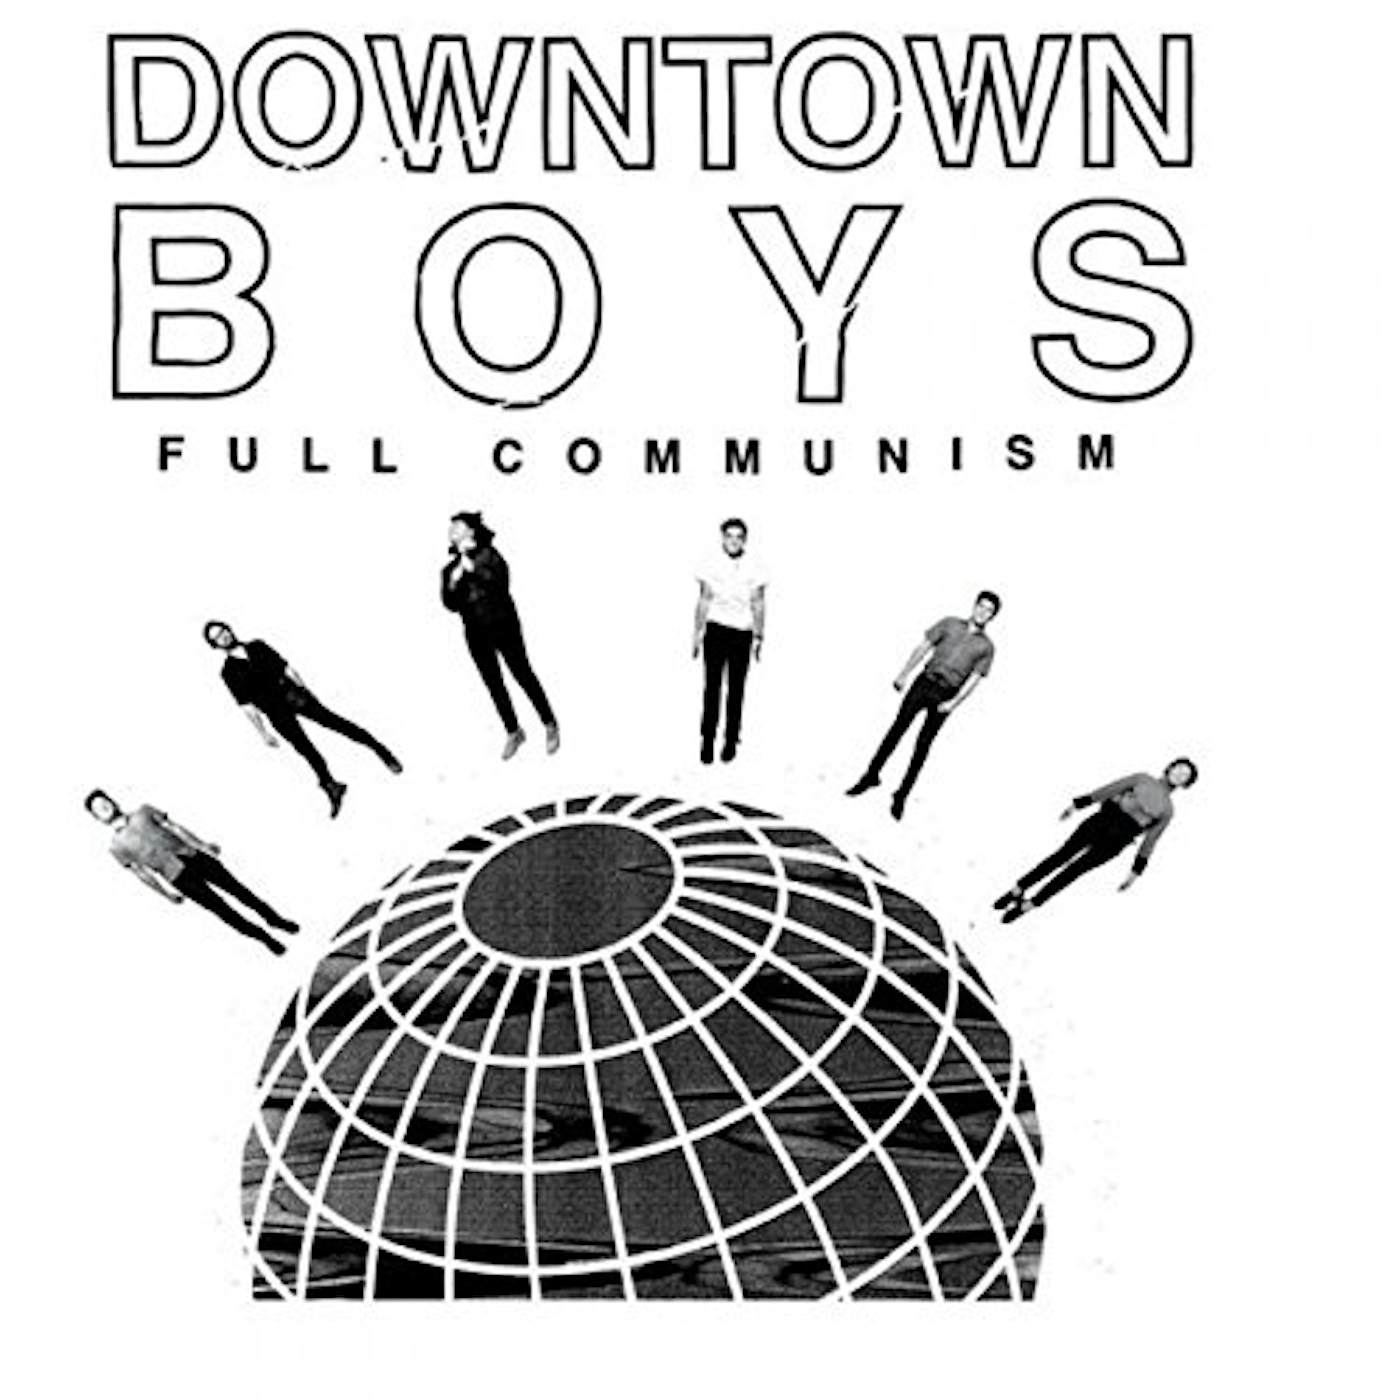 Downtown Boys Full Communism Vinyl Record